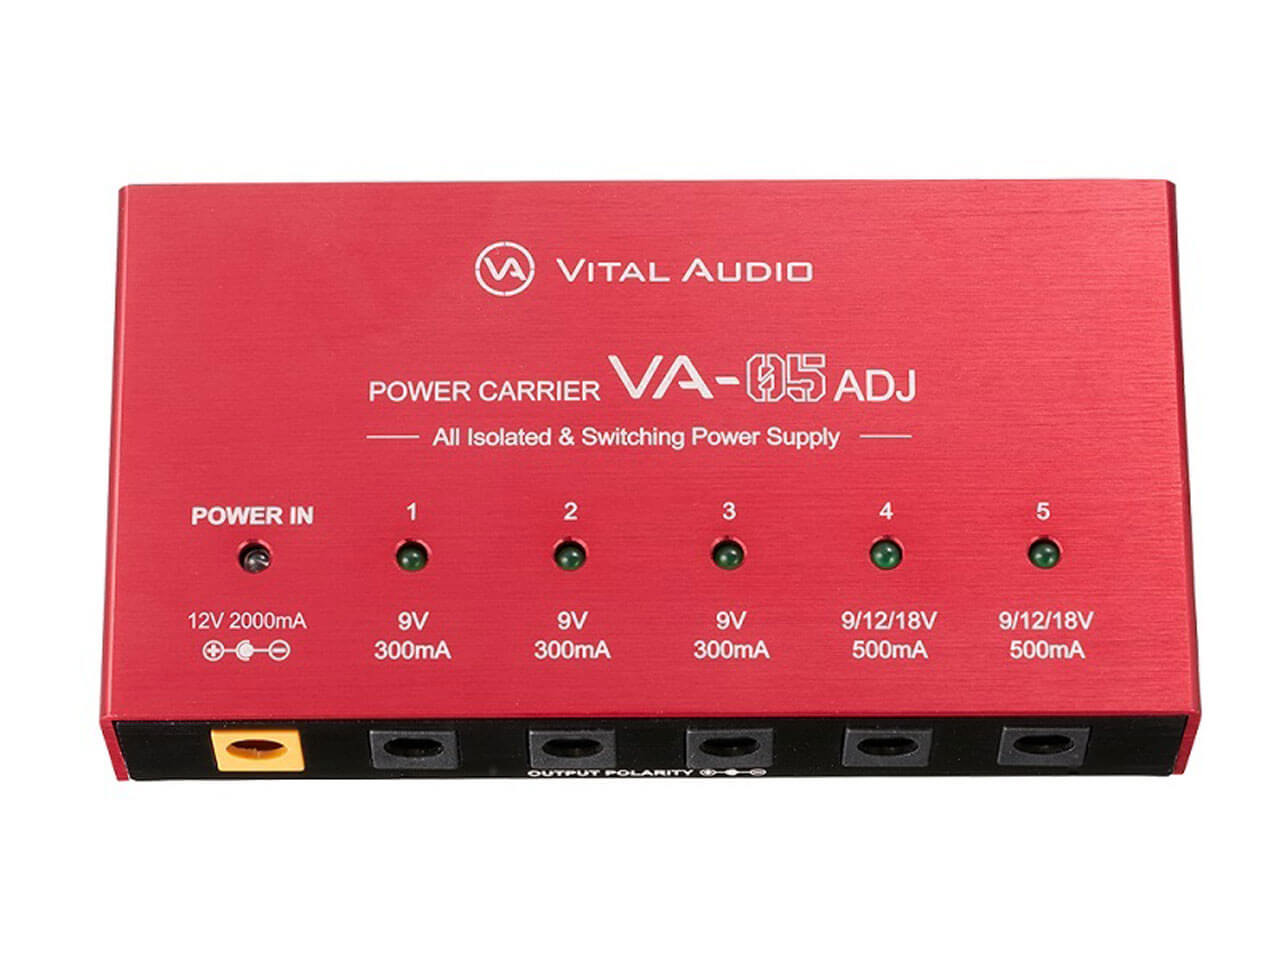 Vital Audio(バイタルオーディオ) POWER CARRIER VA-05 ADJ(パワーサプライ) 駅前店